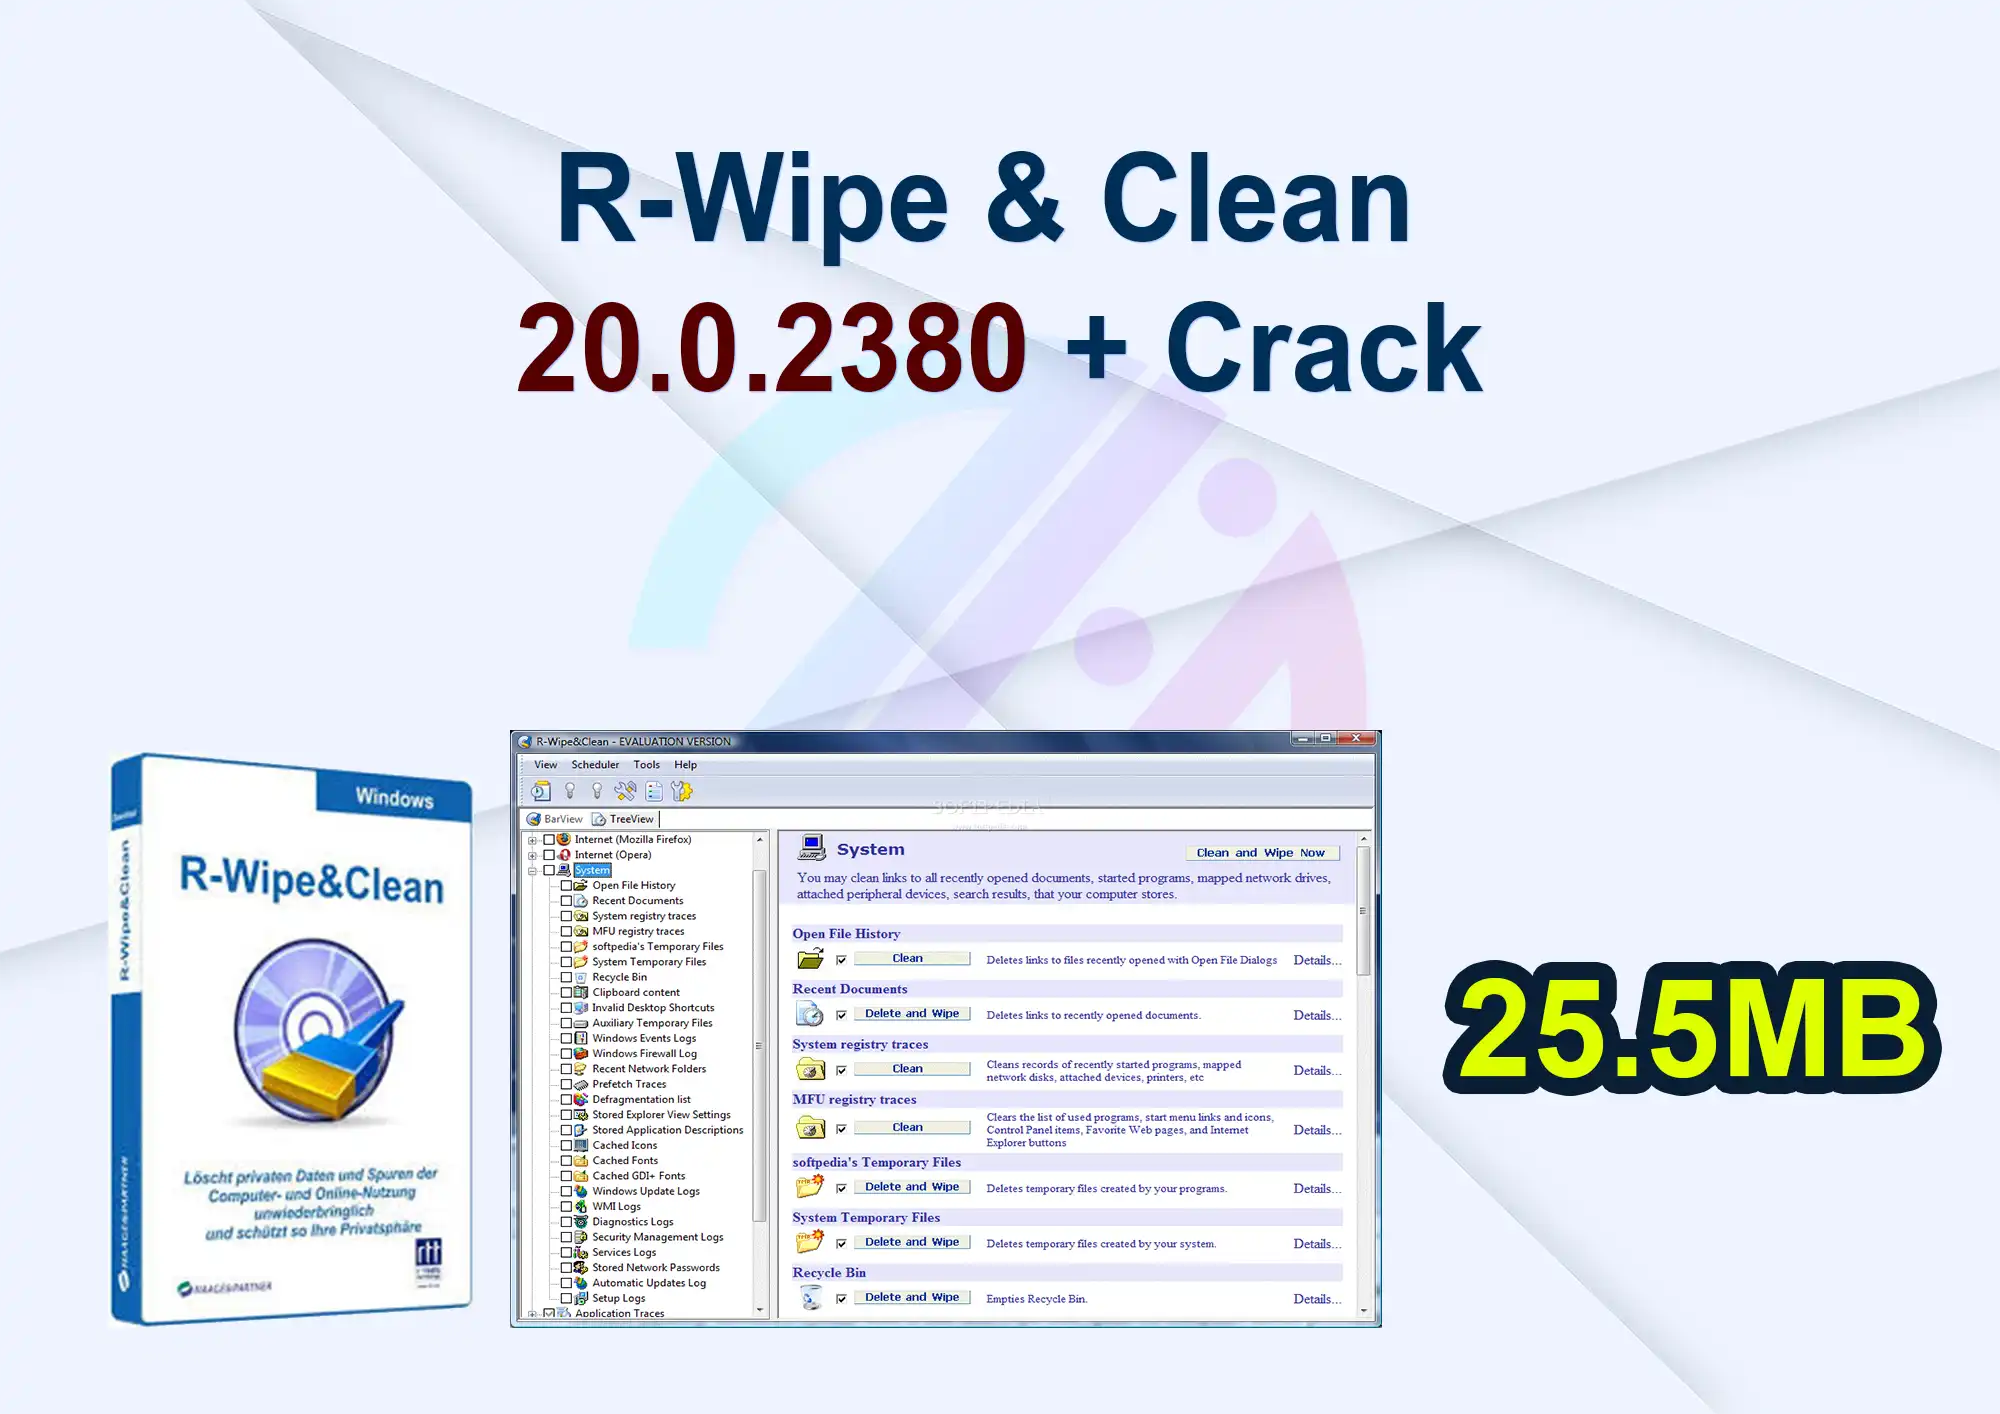 R-Wipe & Clean 20.0.2380 + Crack